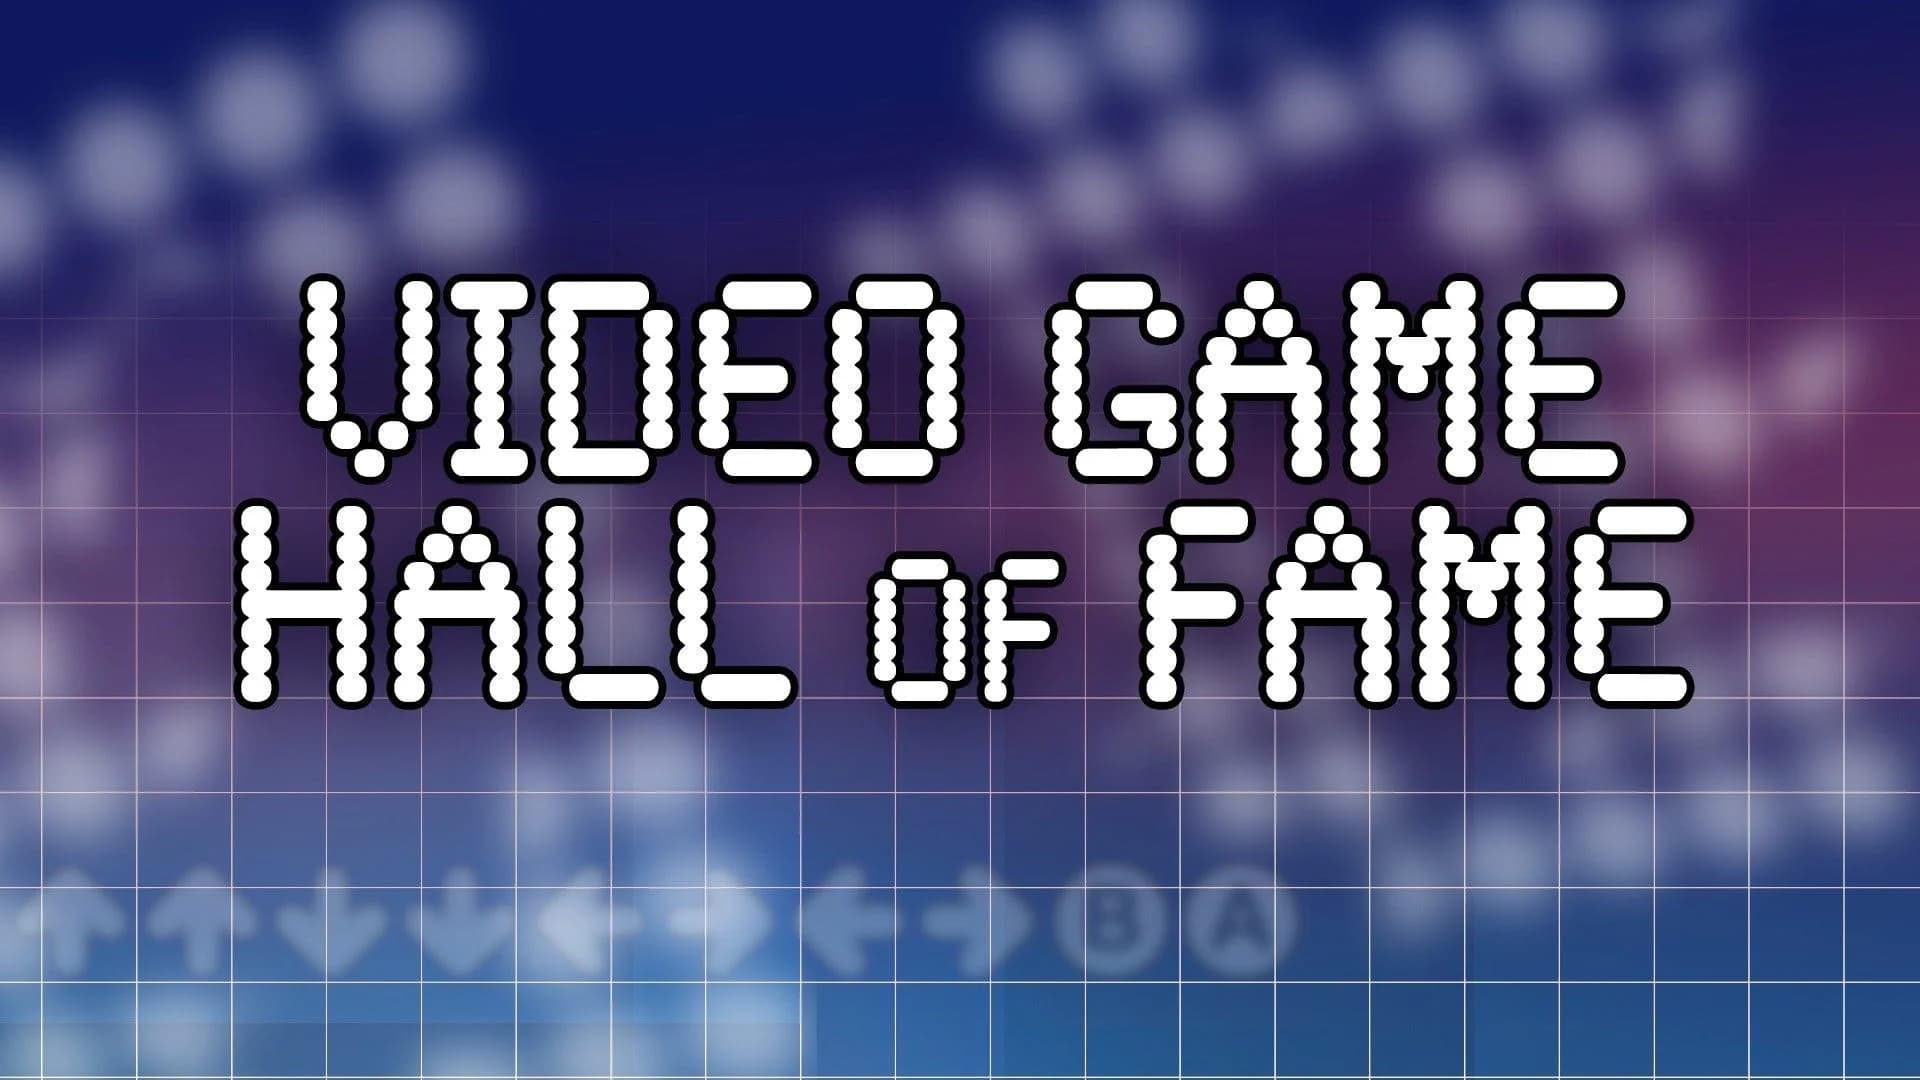 'John Madden Football' scores spot in World Video Game hall